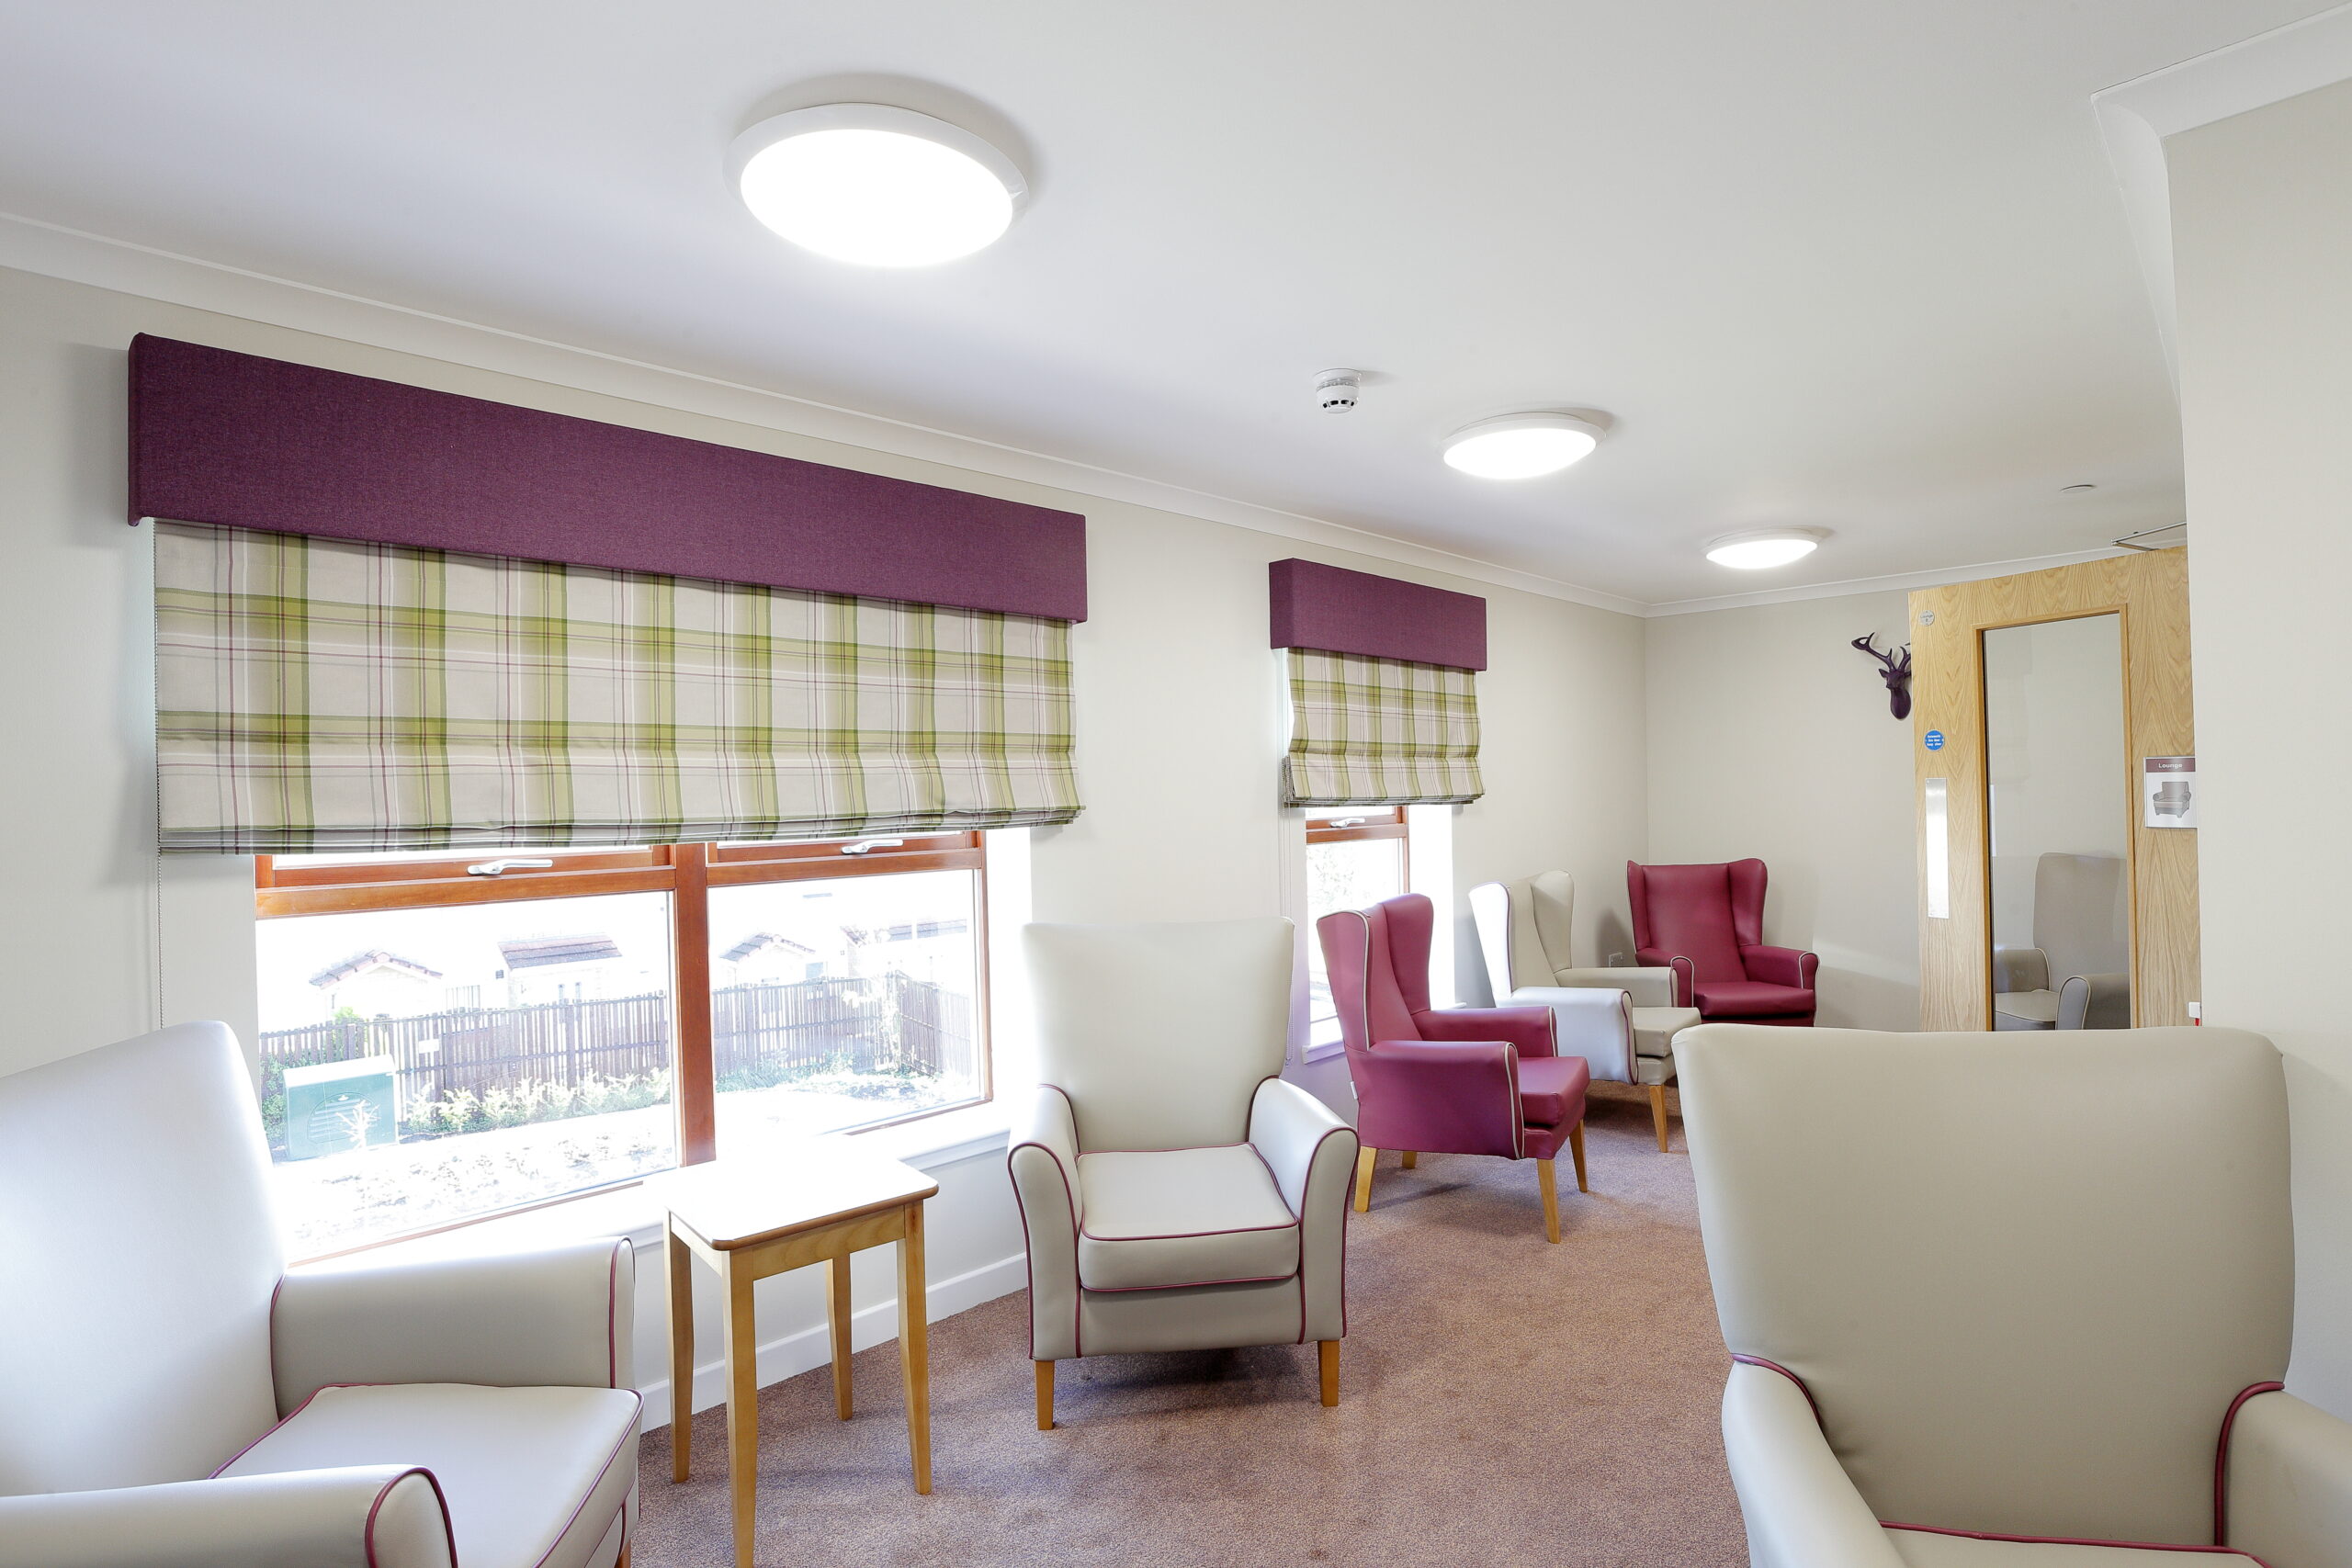 Tamlite Rosehall Care Home seating area LED lighting